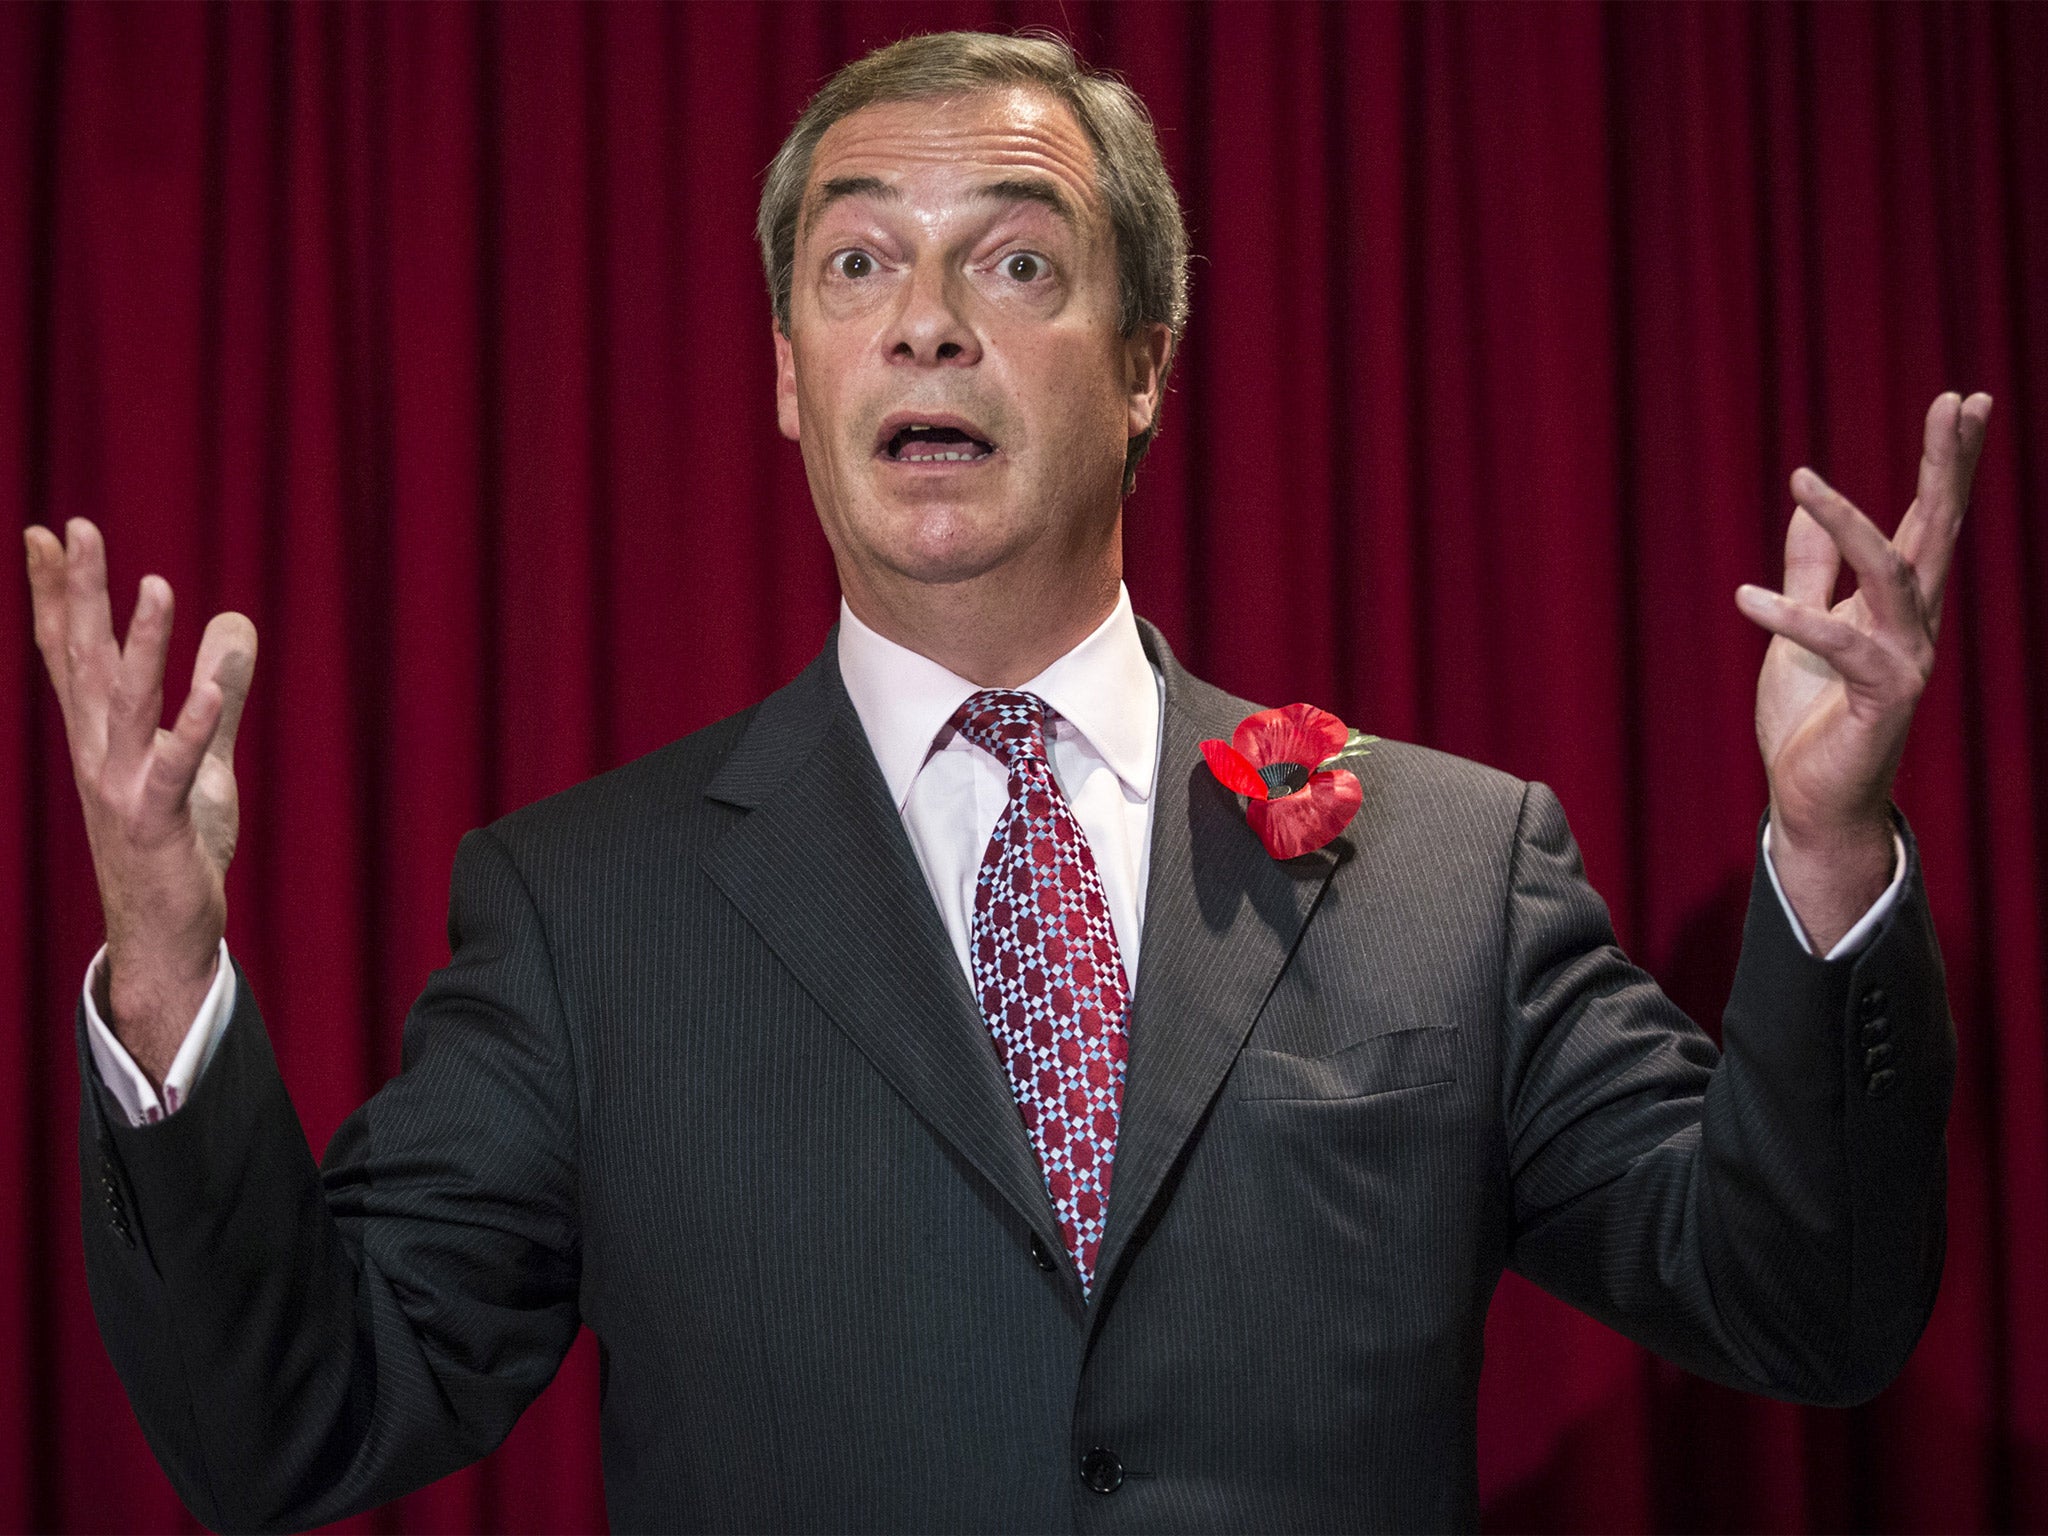 The Ukip leader Nigel Farage